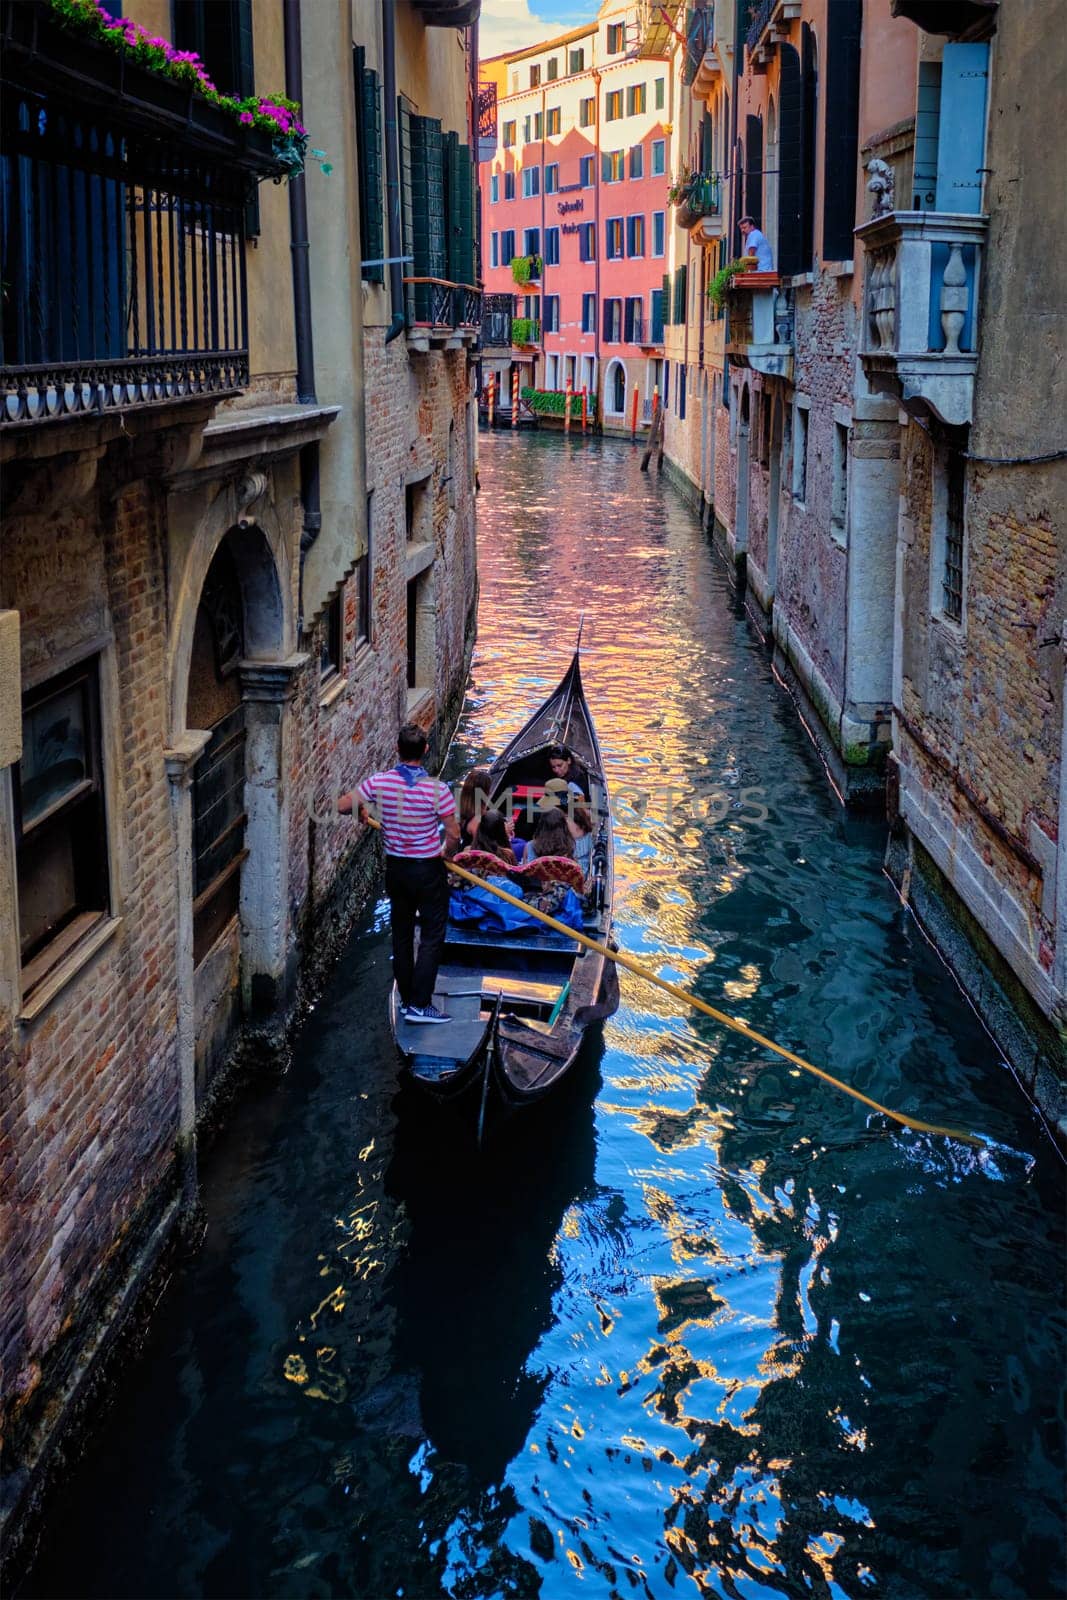 Narrow canal with gondola in Venice, Italy by dimol